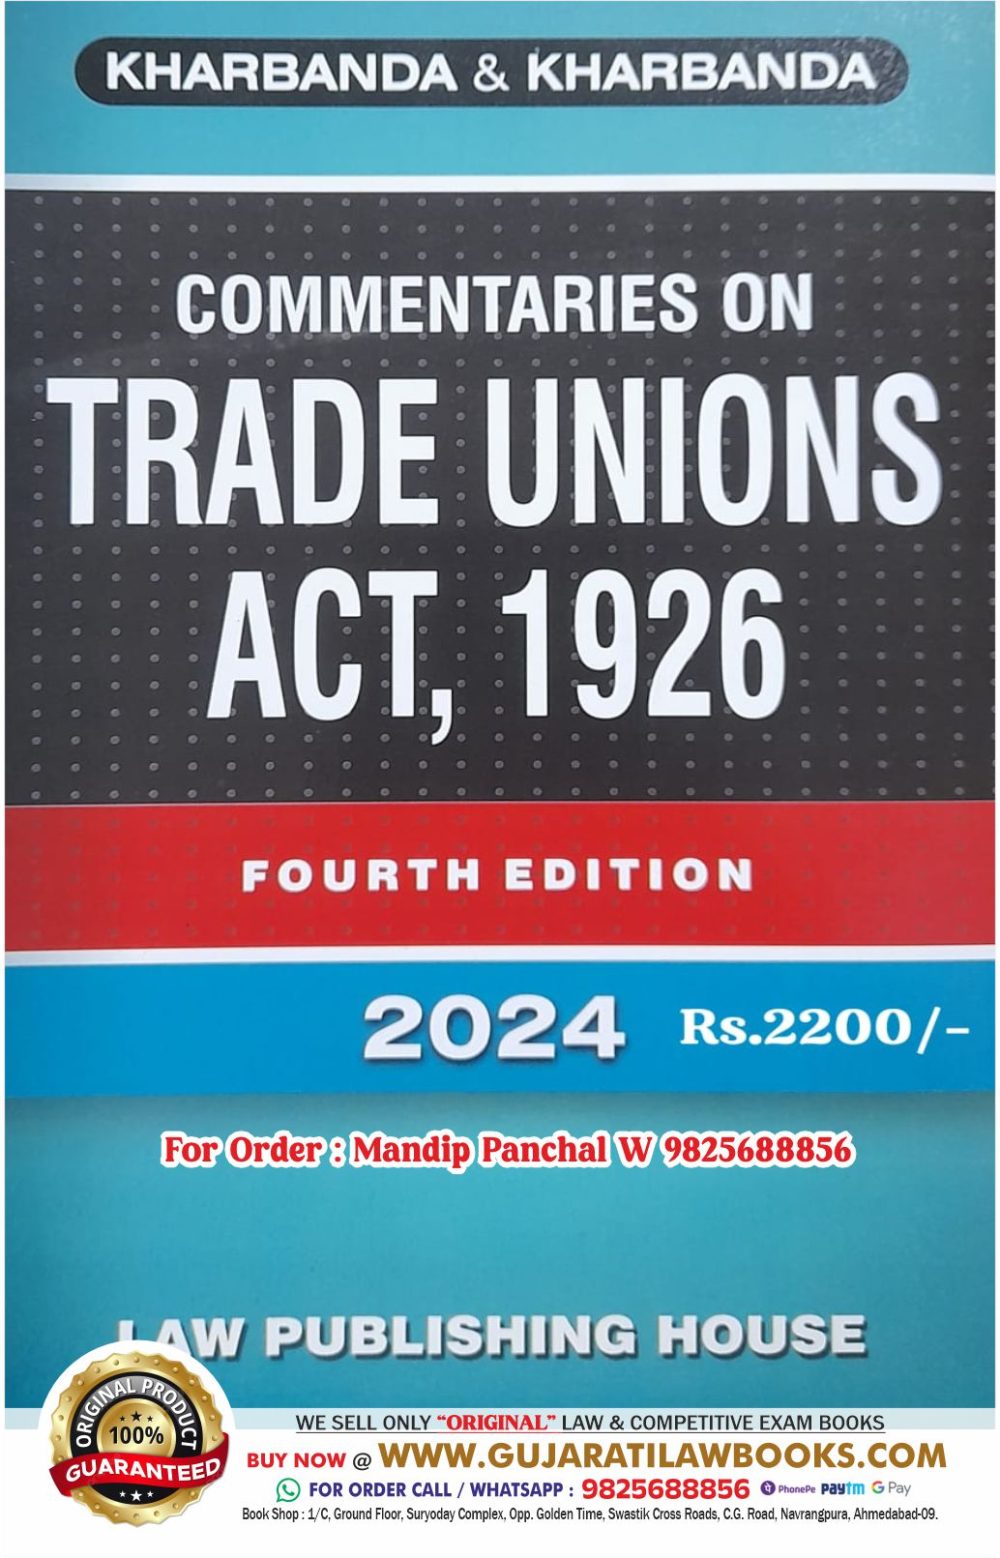 Kharbanda & Kharbanda COMMENTARIES ON TRADE UNIONS ACT, 1926 - Latest 4th Edition 2024